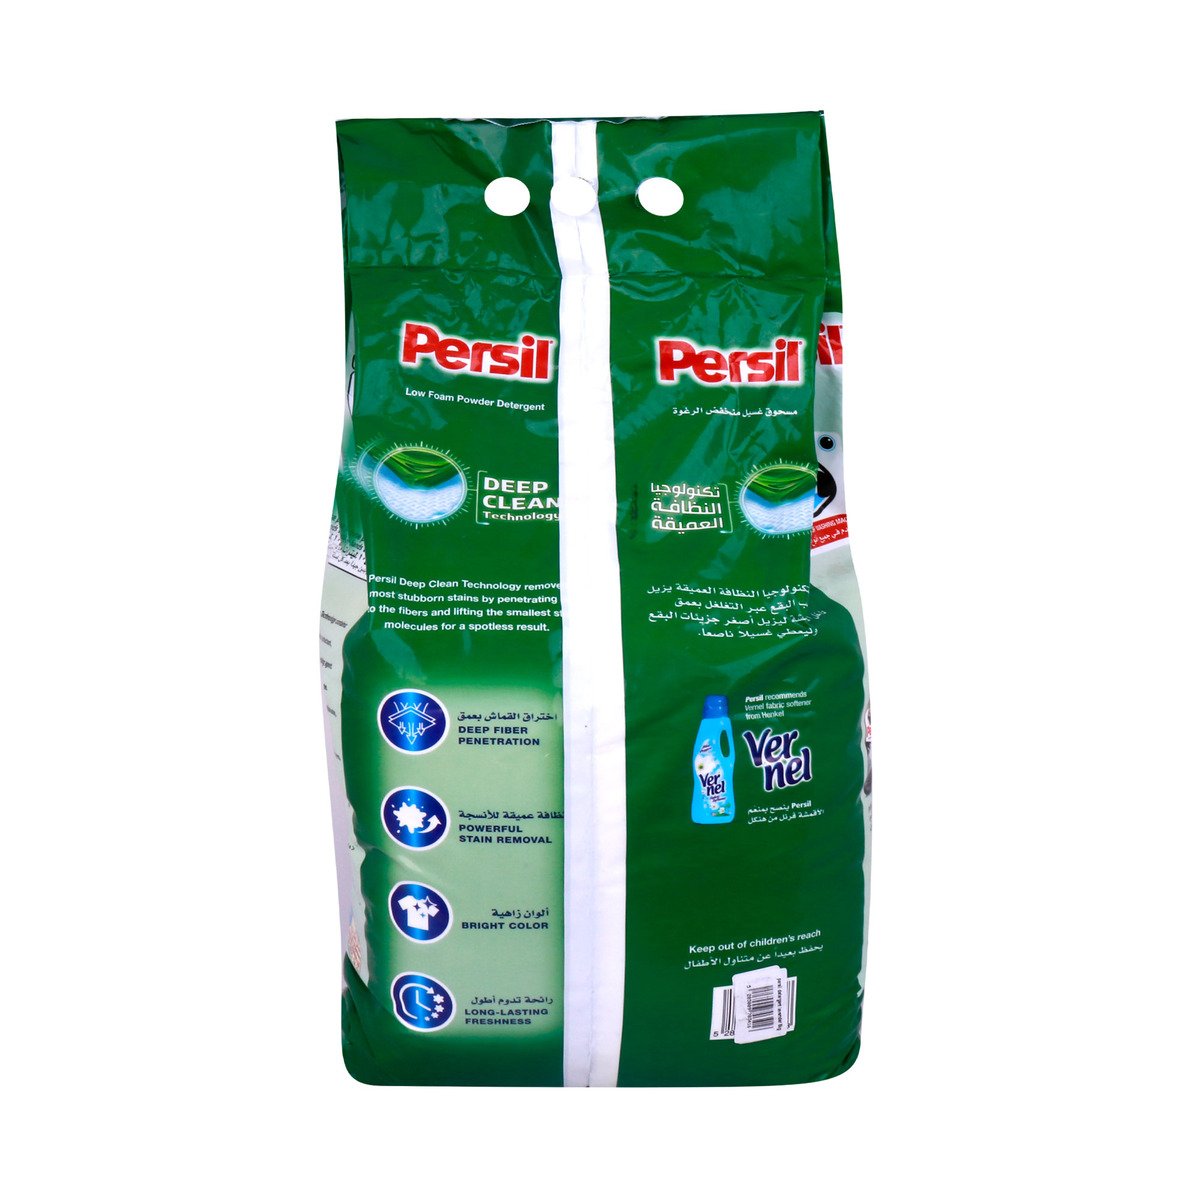 Persil Deep Clean Lavender Washing Powder Value Pack 8 kg